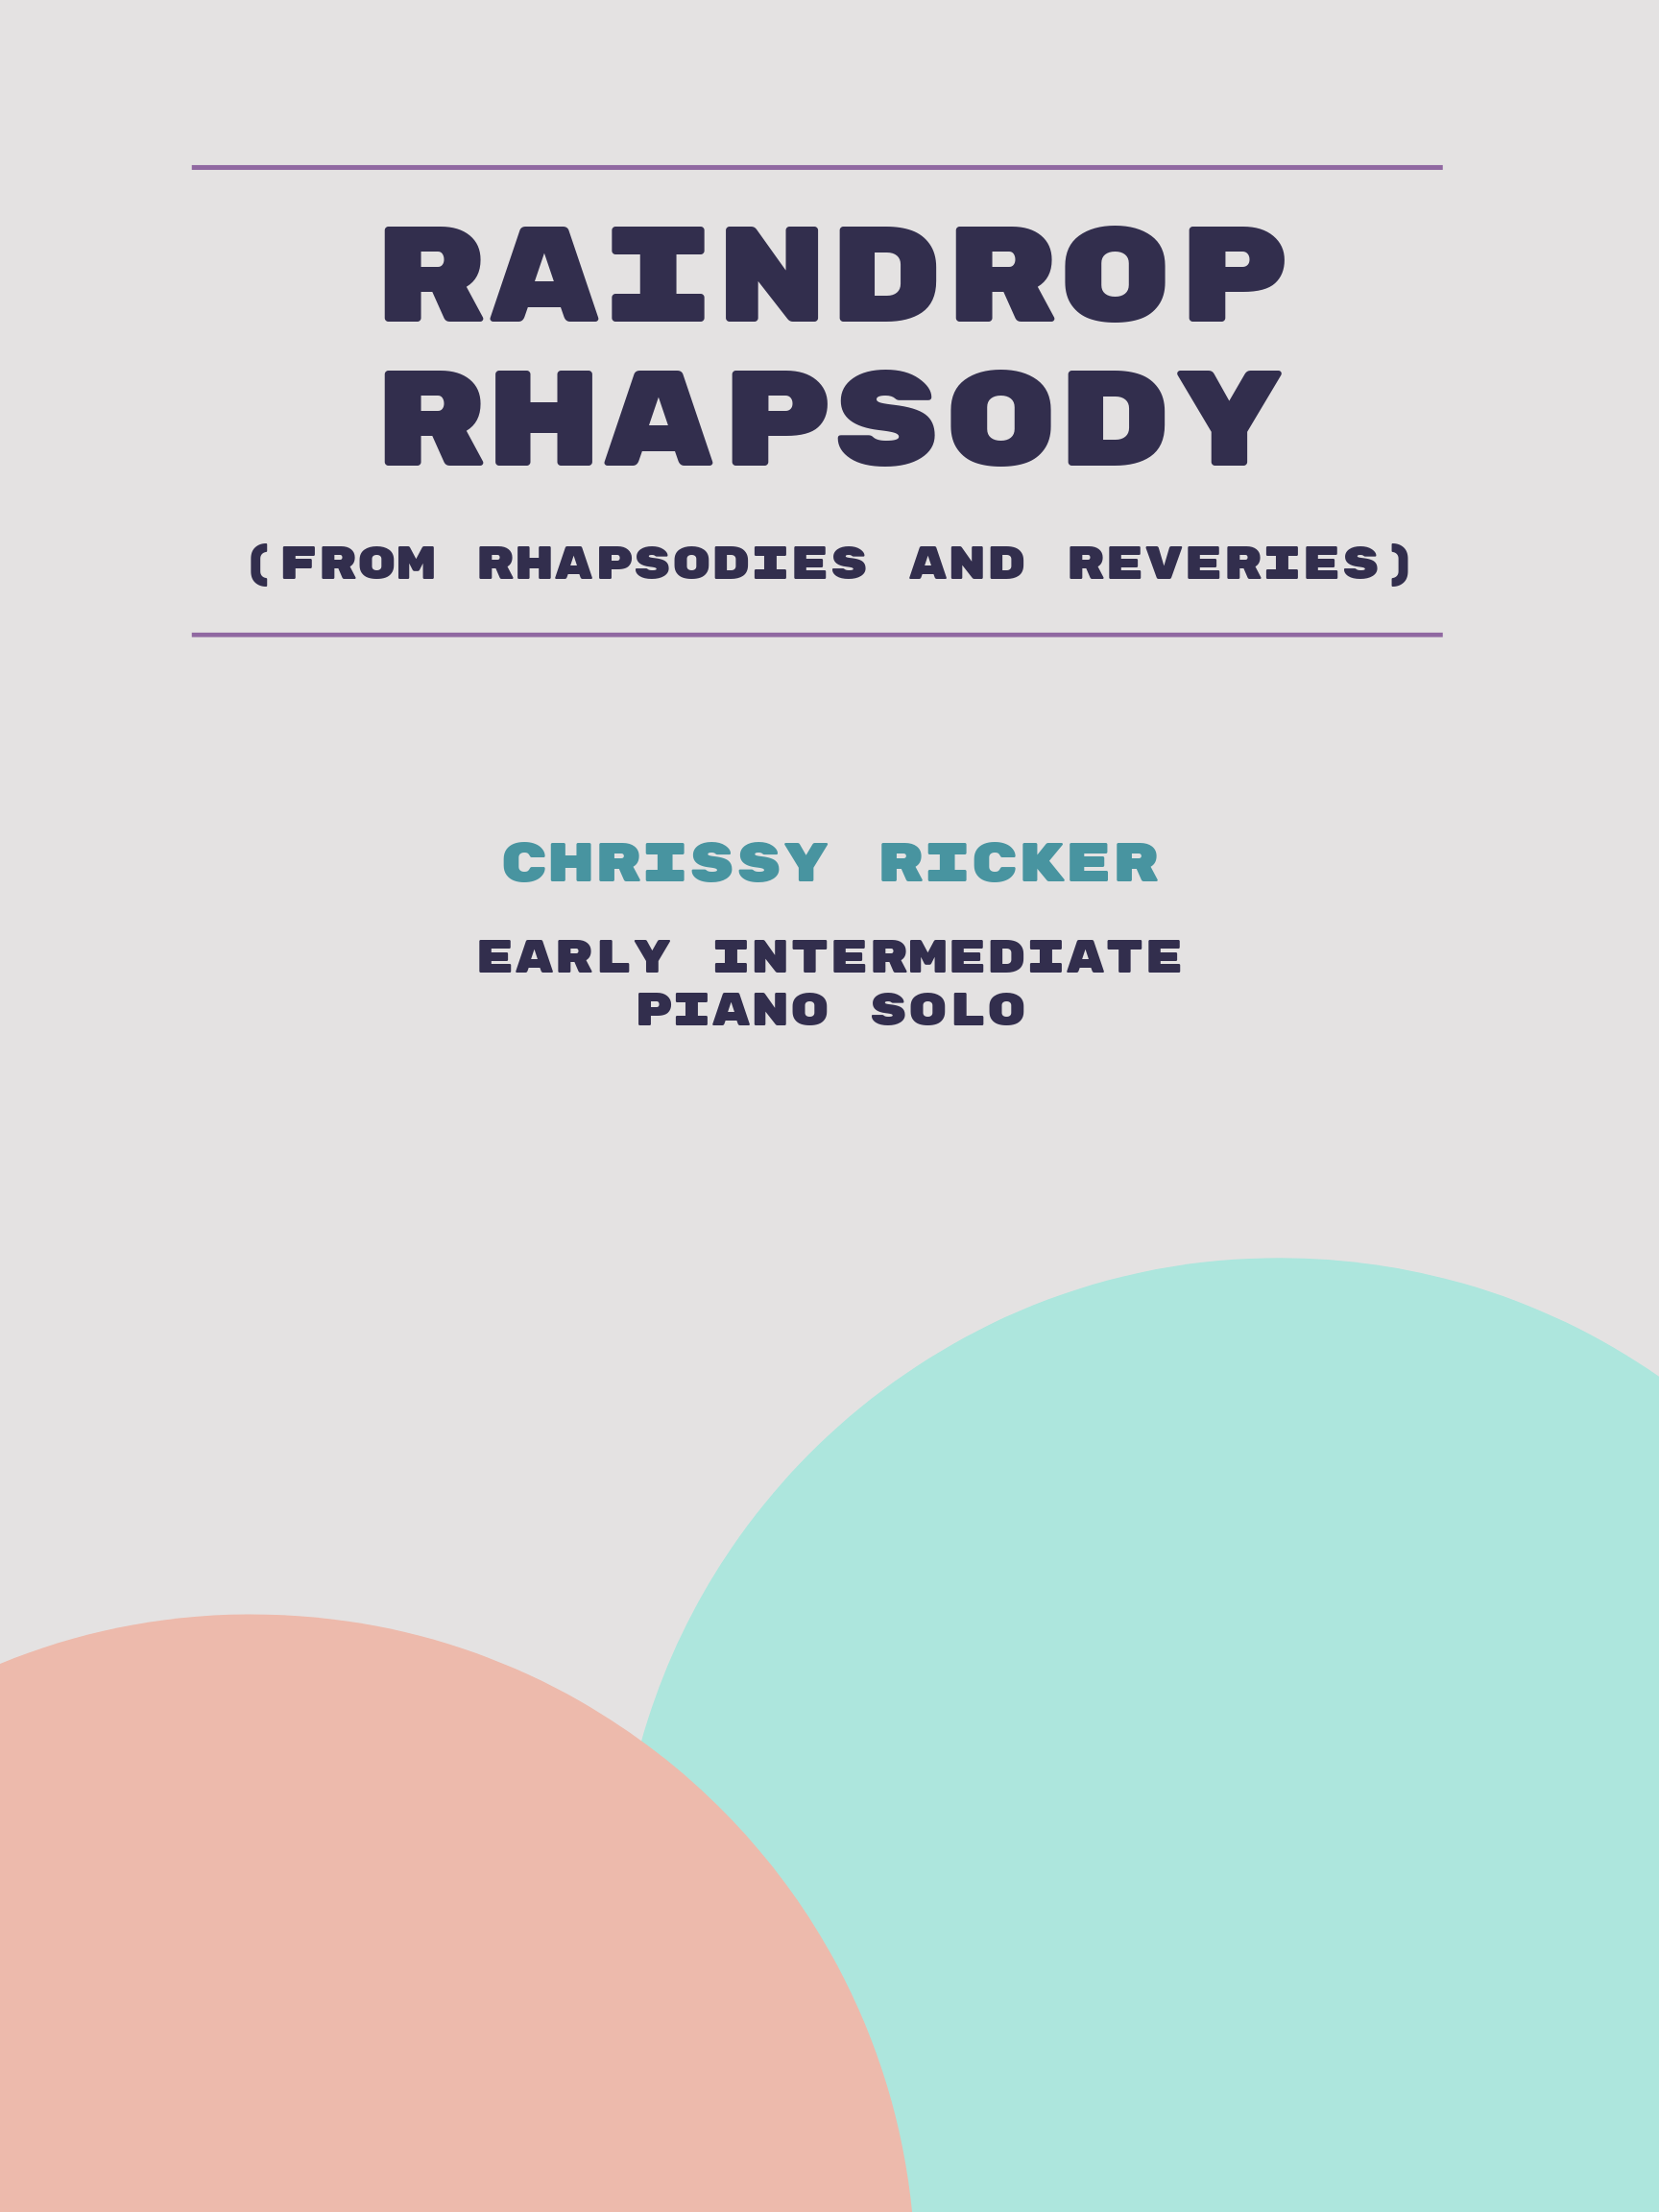 Raindrop Rhapsody by Chrissy Ricker